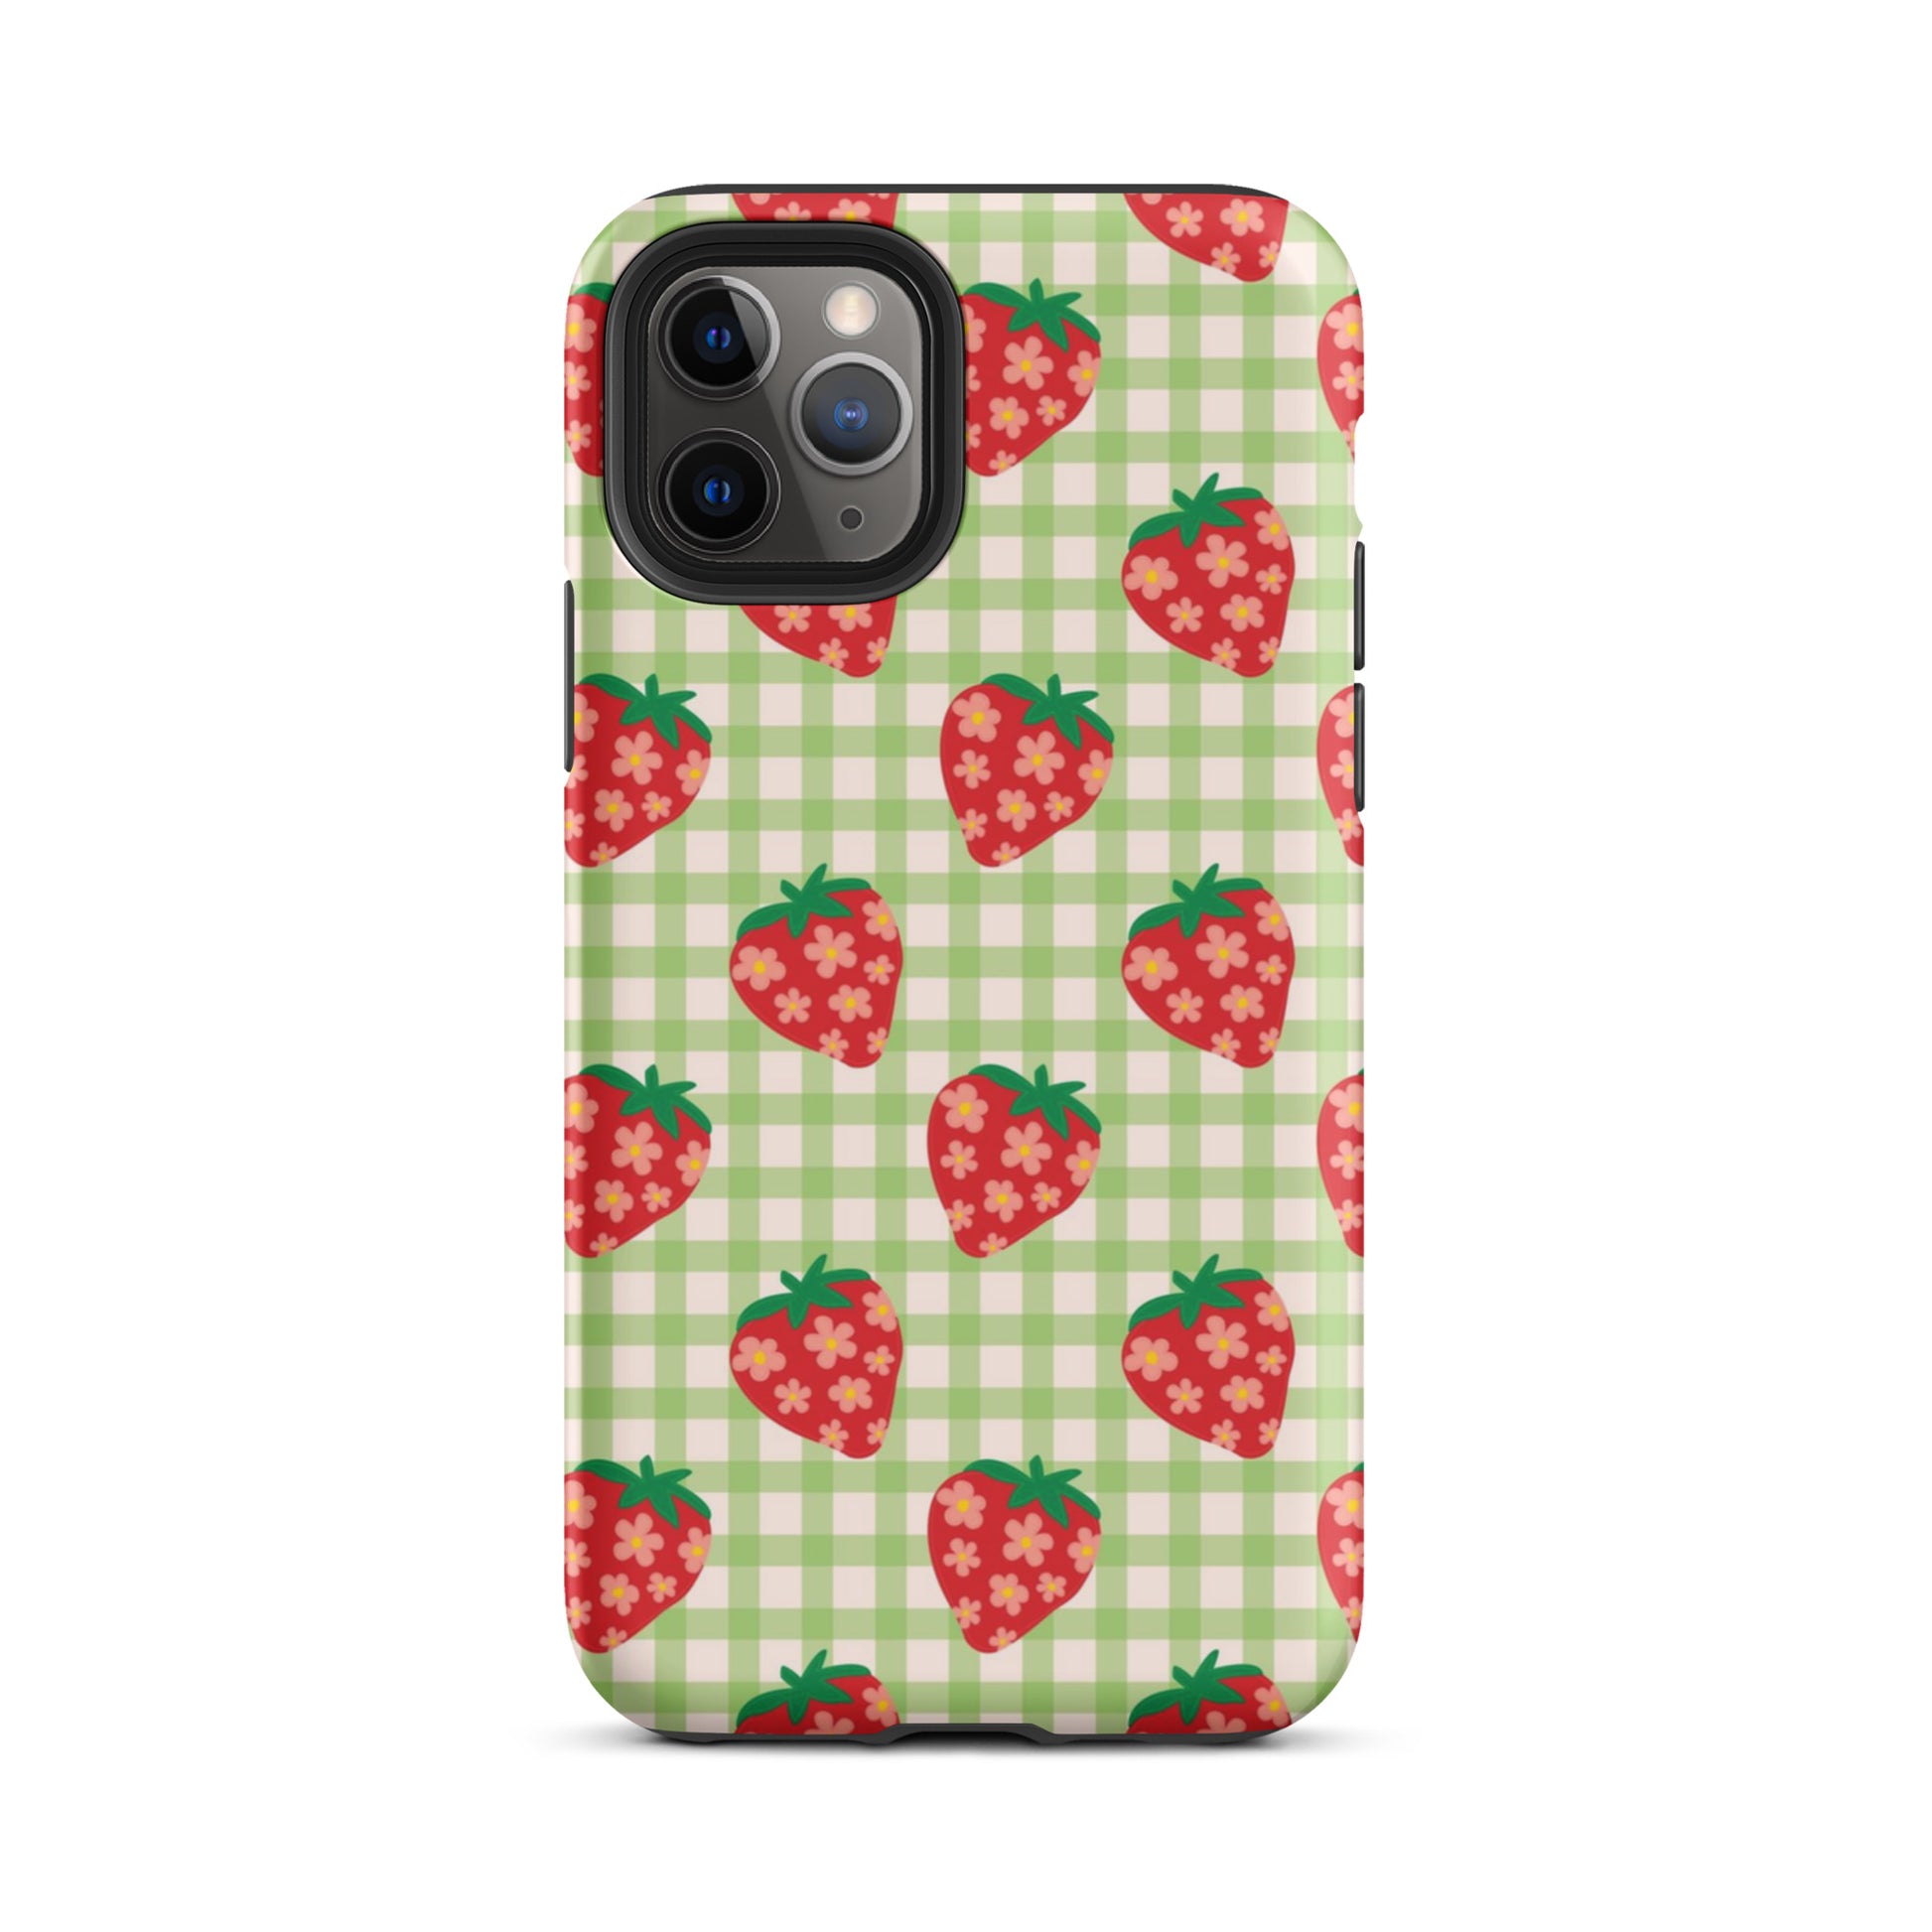 Strawberry Picnic iPhone Case iPhone 11 Pro Matte